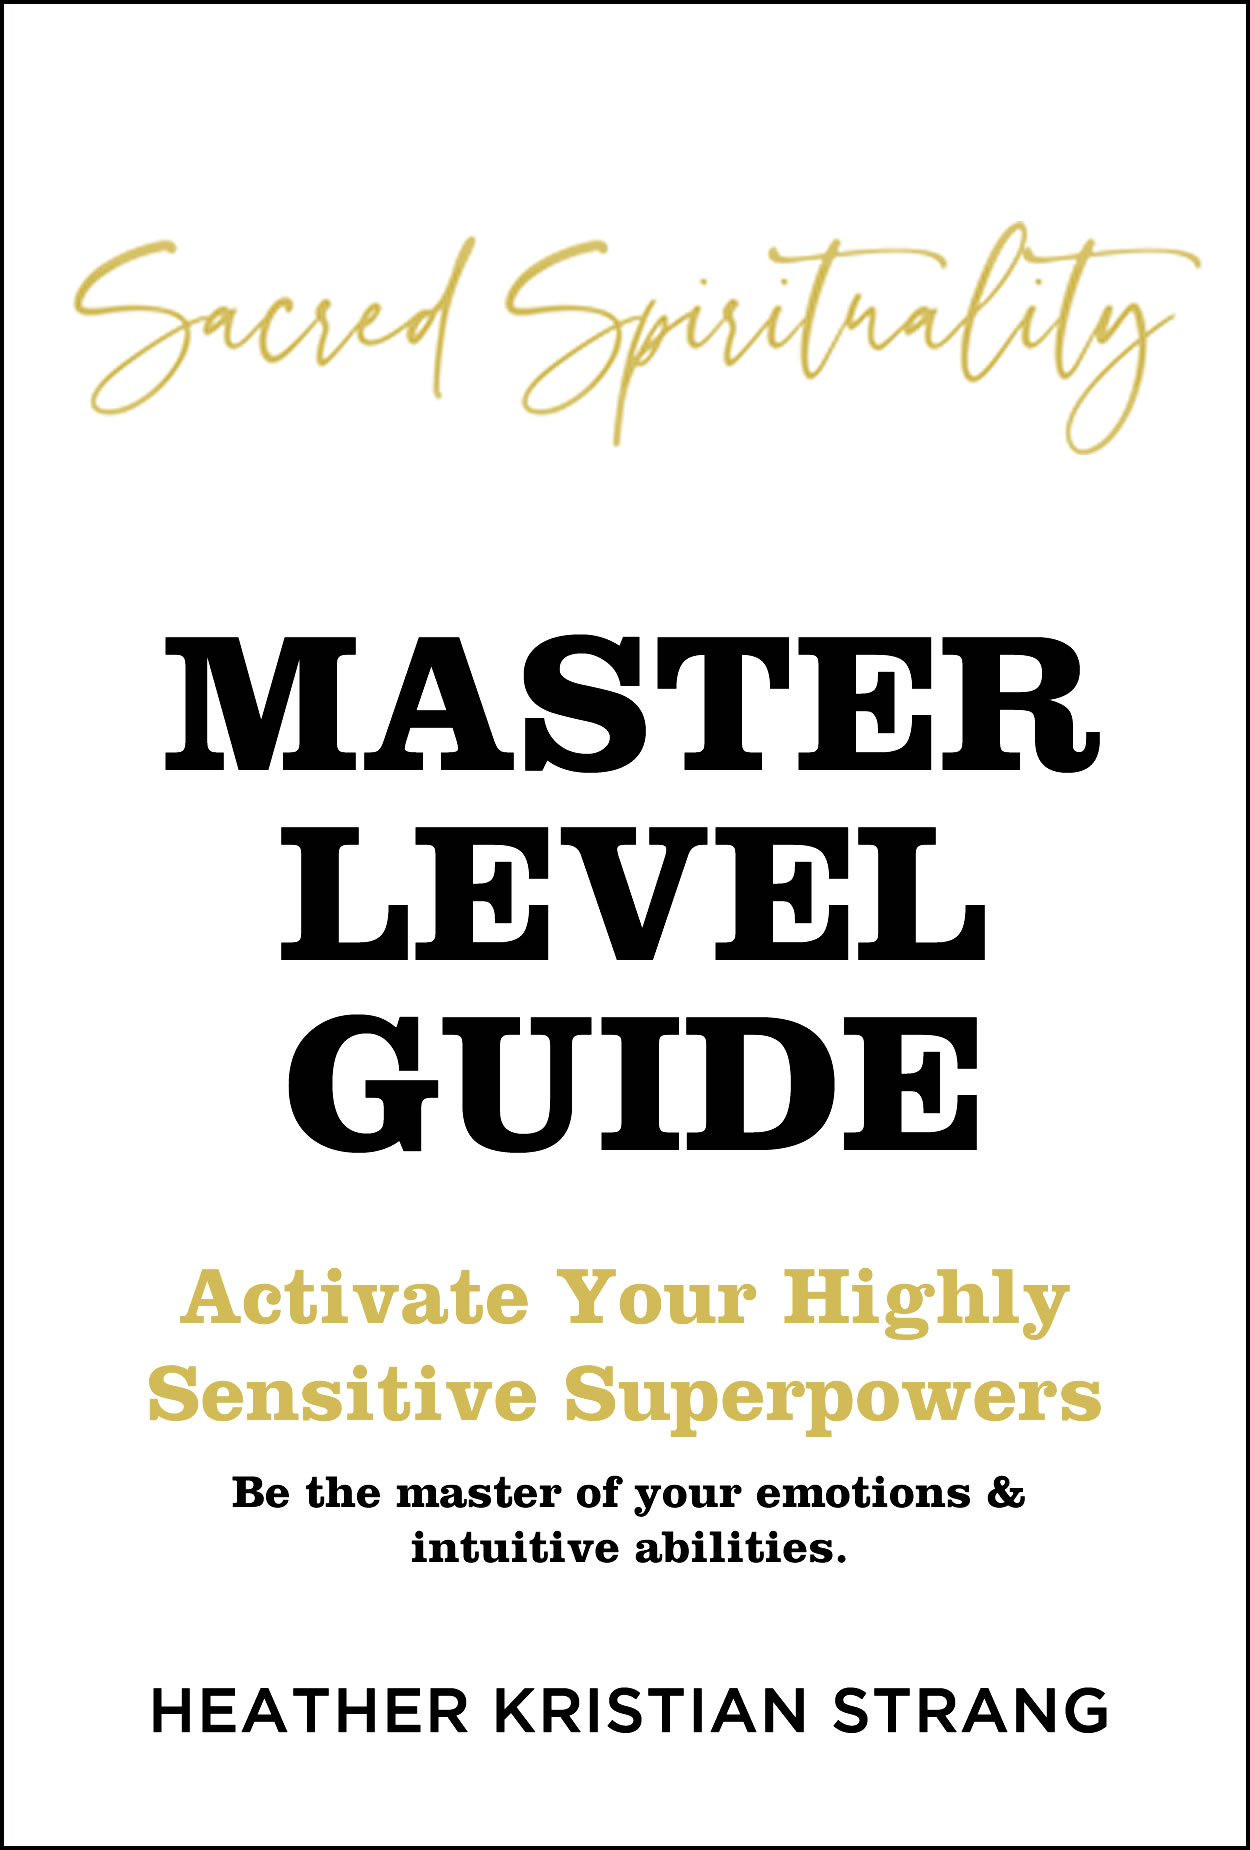 master-level-guide